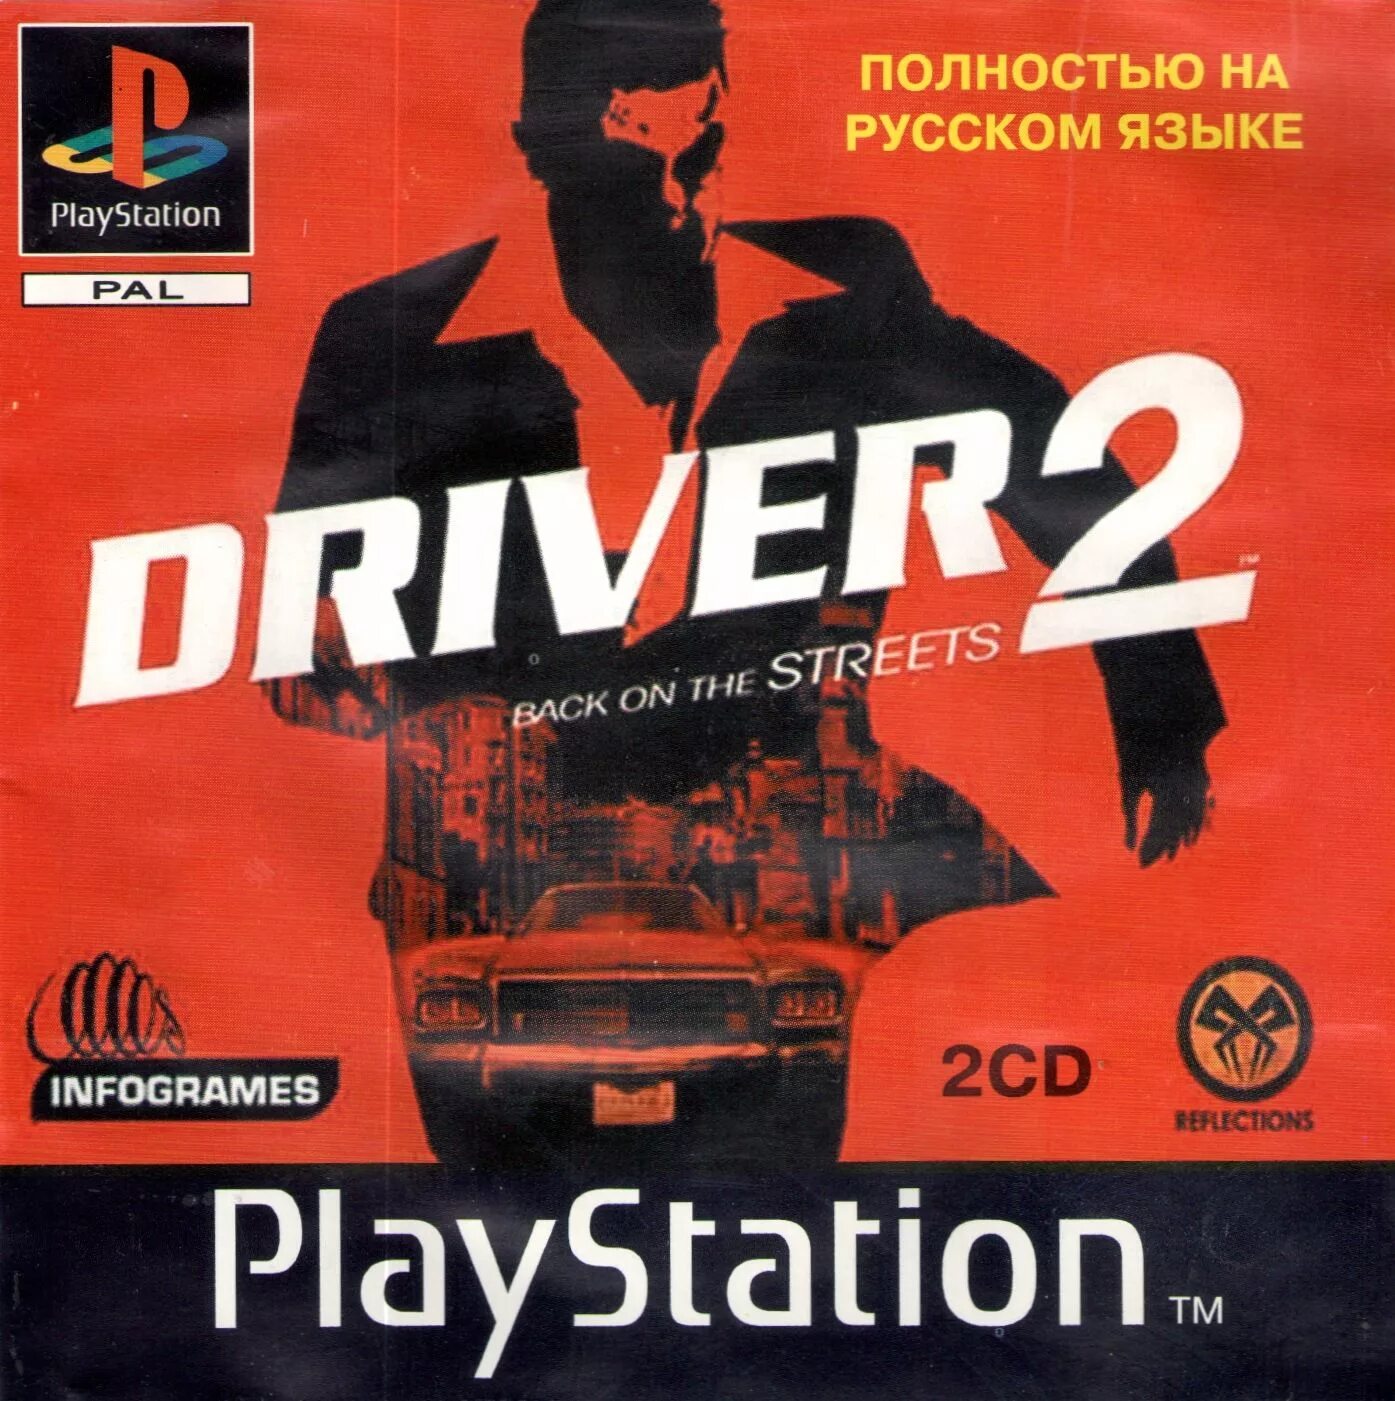 Включи водитель 2. Driver 2 Sony PLAYSTATION 1. Driver 2 обложка. Driver 2 ps1 обложка. Driver Sony PS 2.